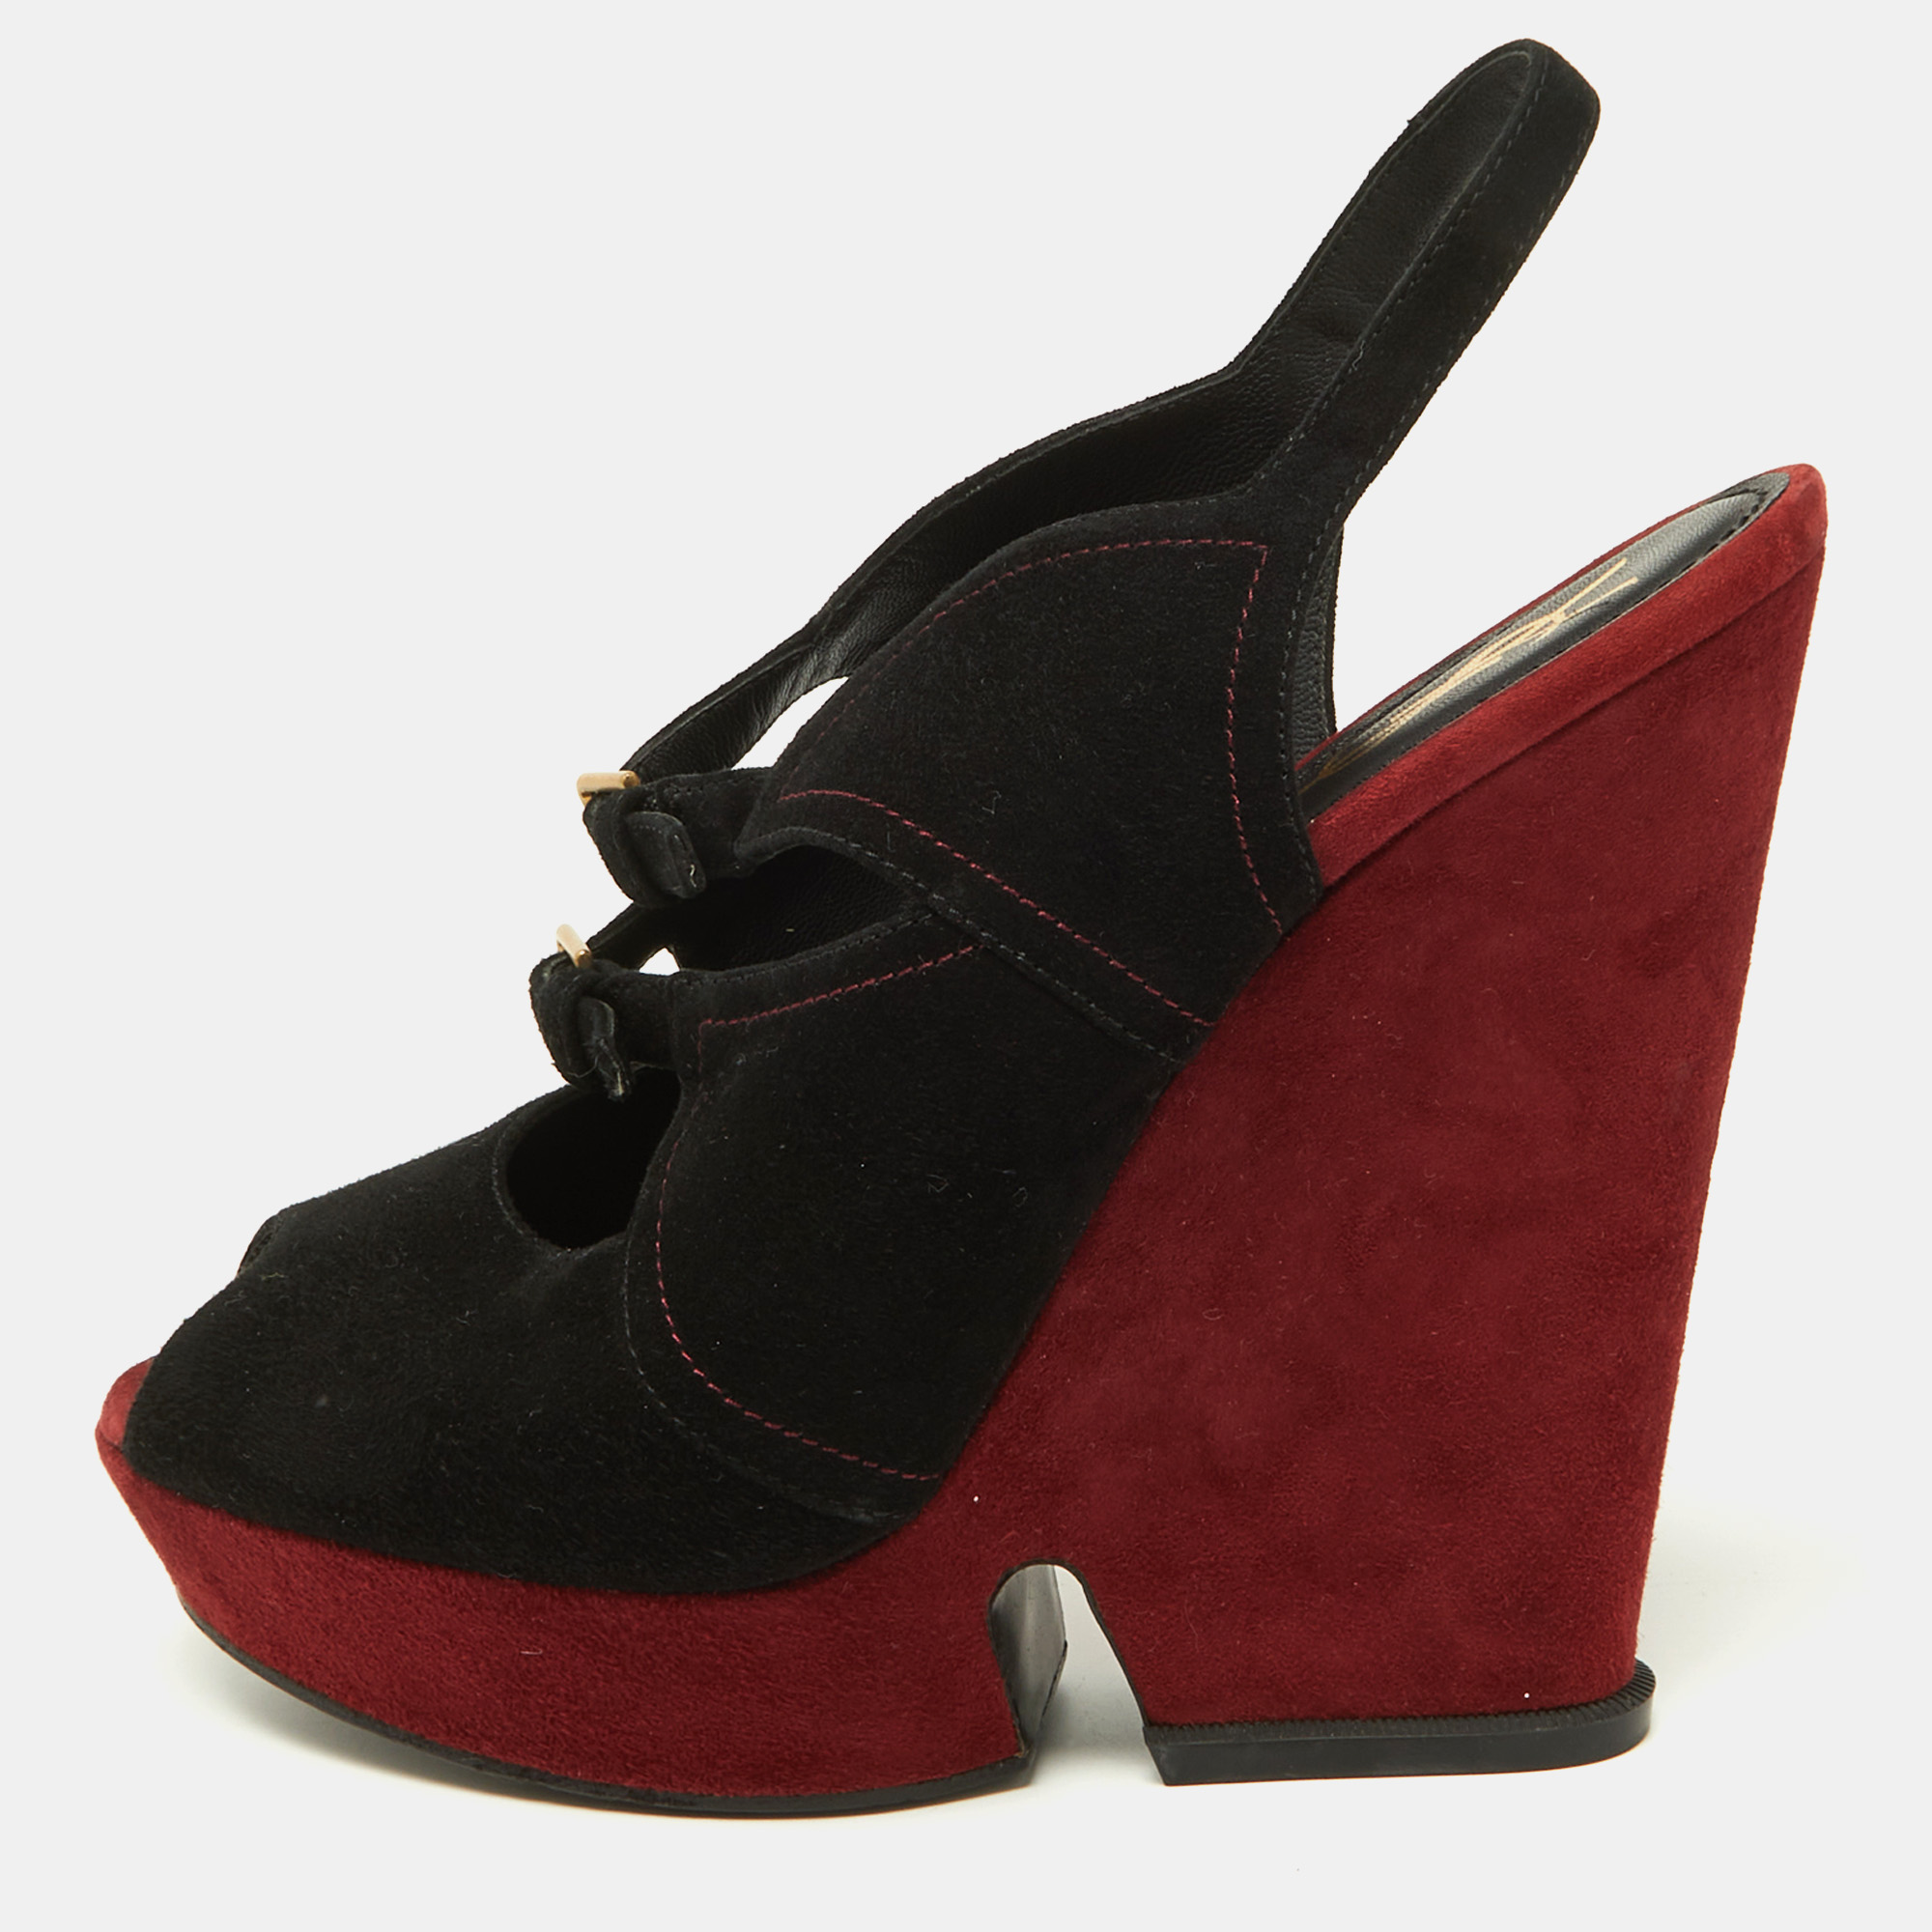 Yves saint laurent black/burgundy suede slingback wedge sandals size 41